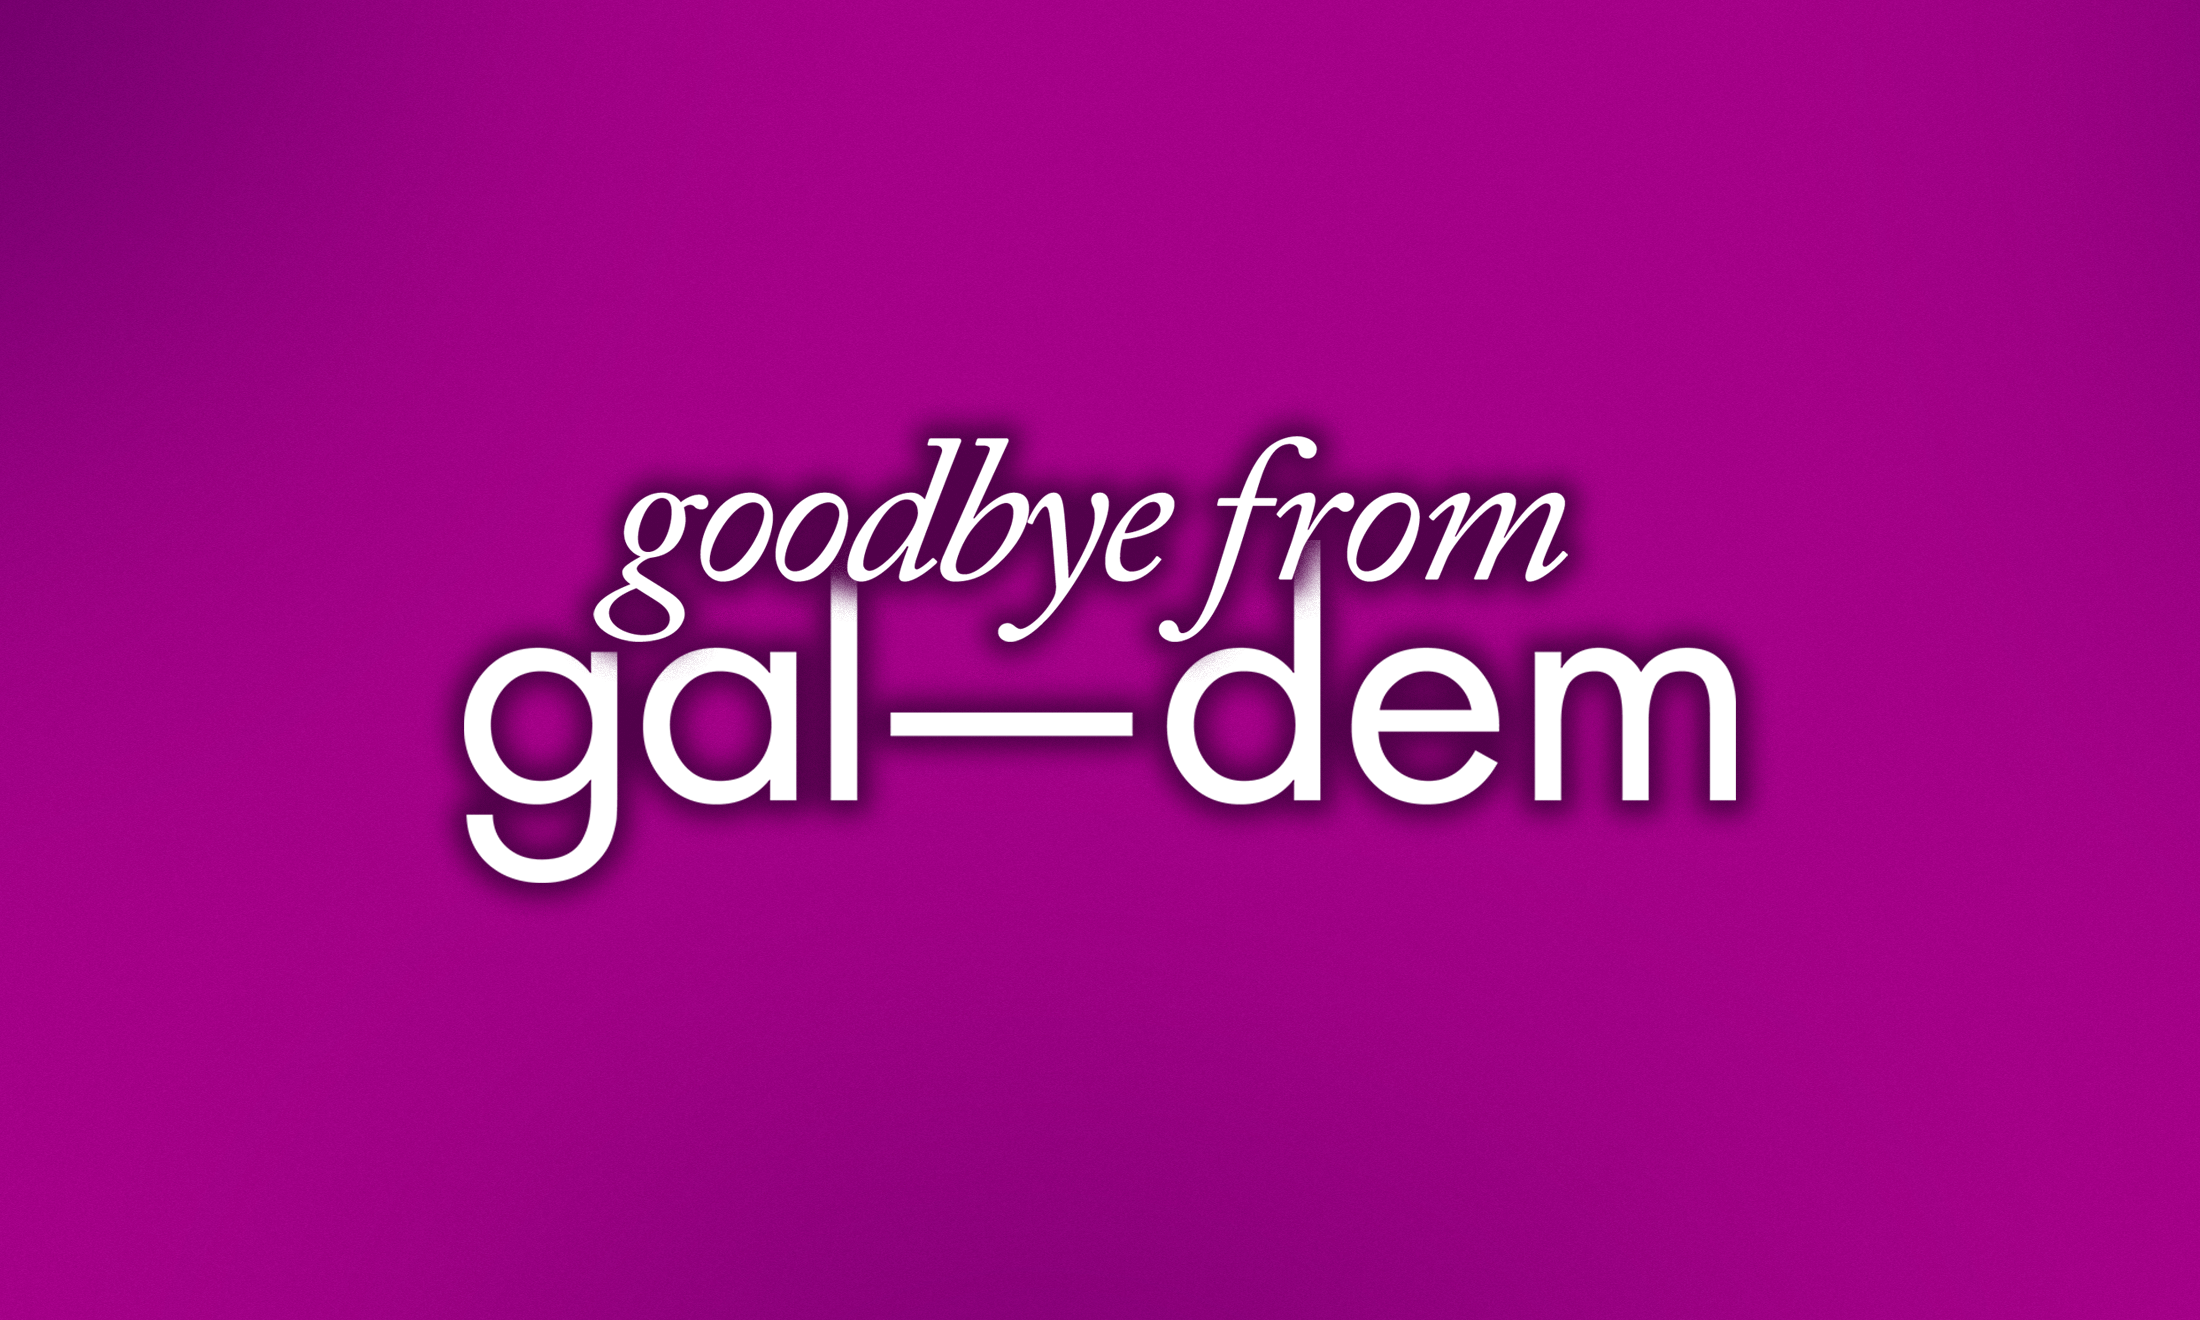 Goodbye from gal-dem